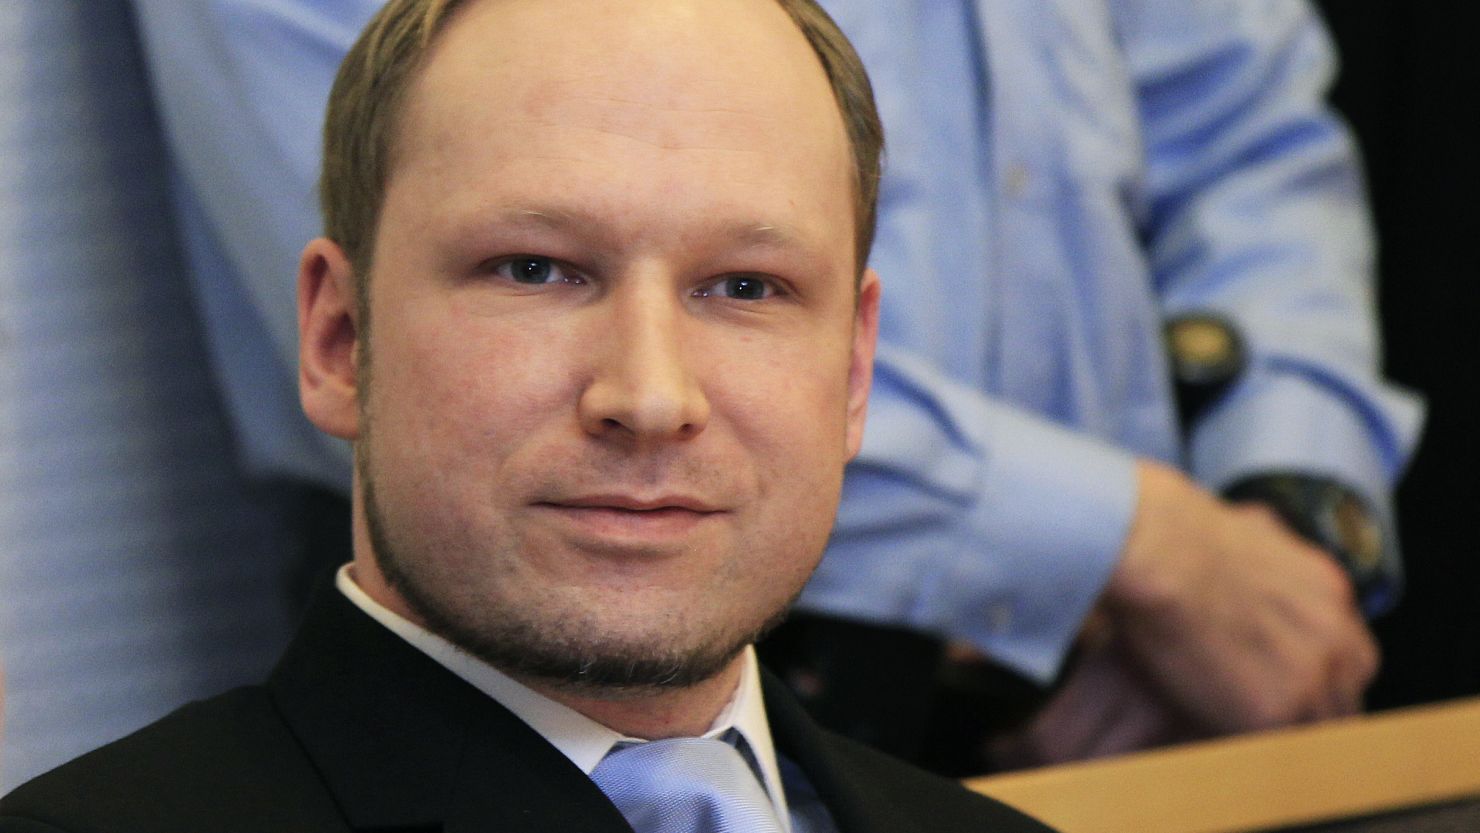 Anders Behring Breivik appears in court Monday in Olso, Norway. He will be kept in custody until his trial in April.